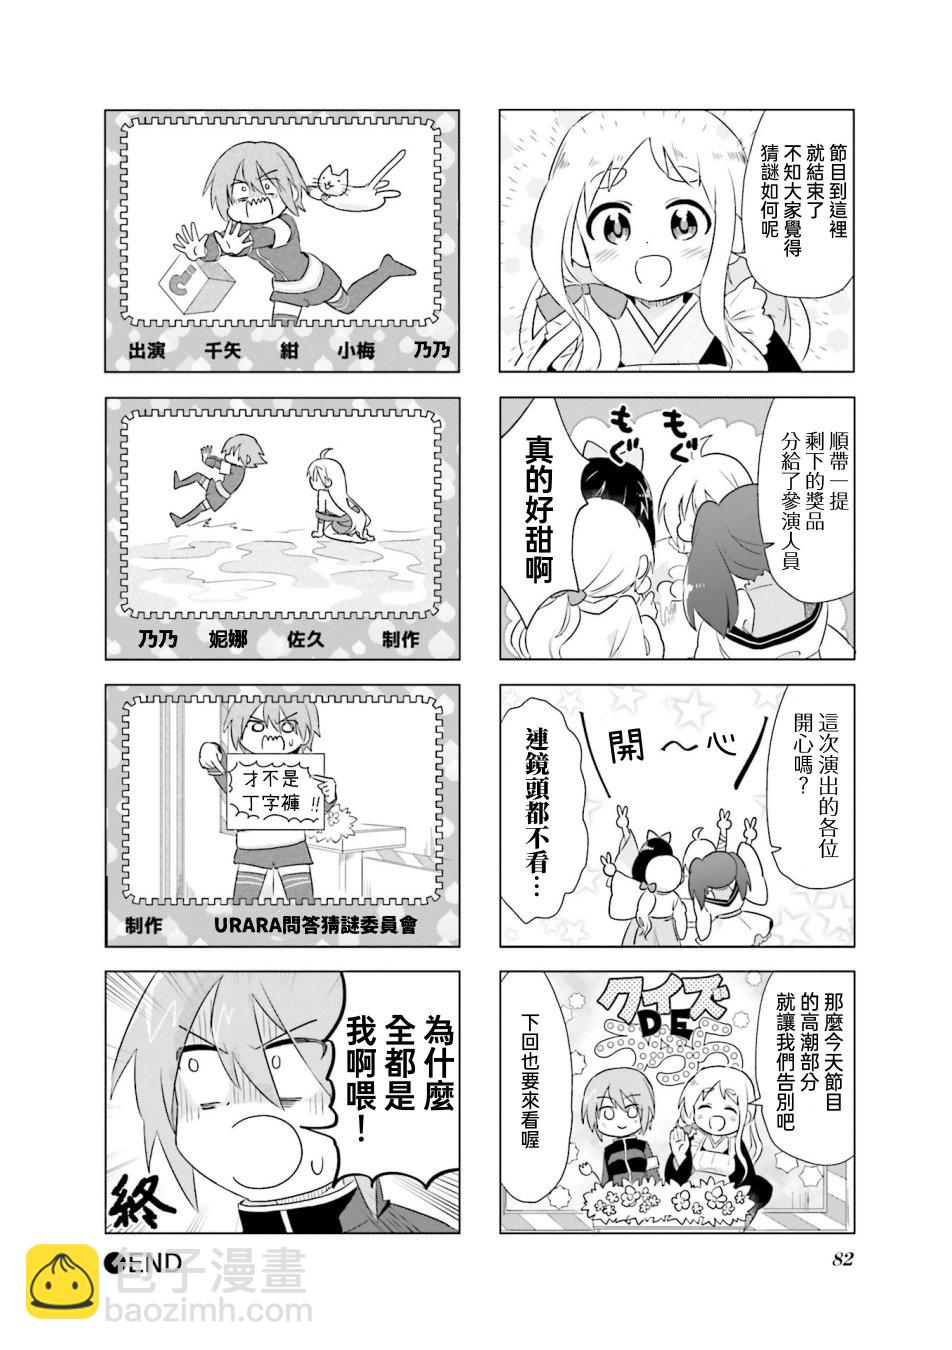 Urara迷路帖 漫画选集 - 第9话 - 2